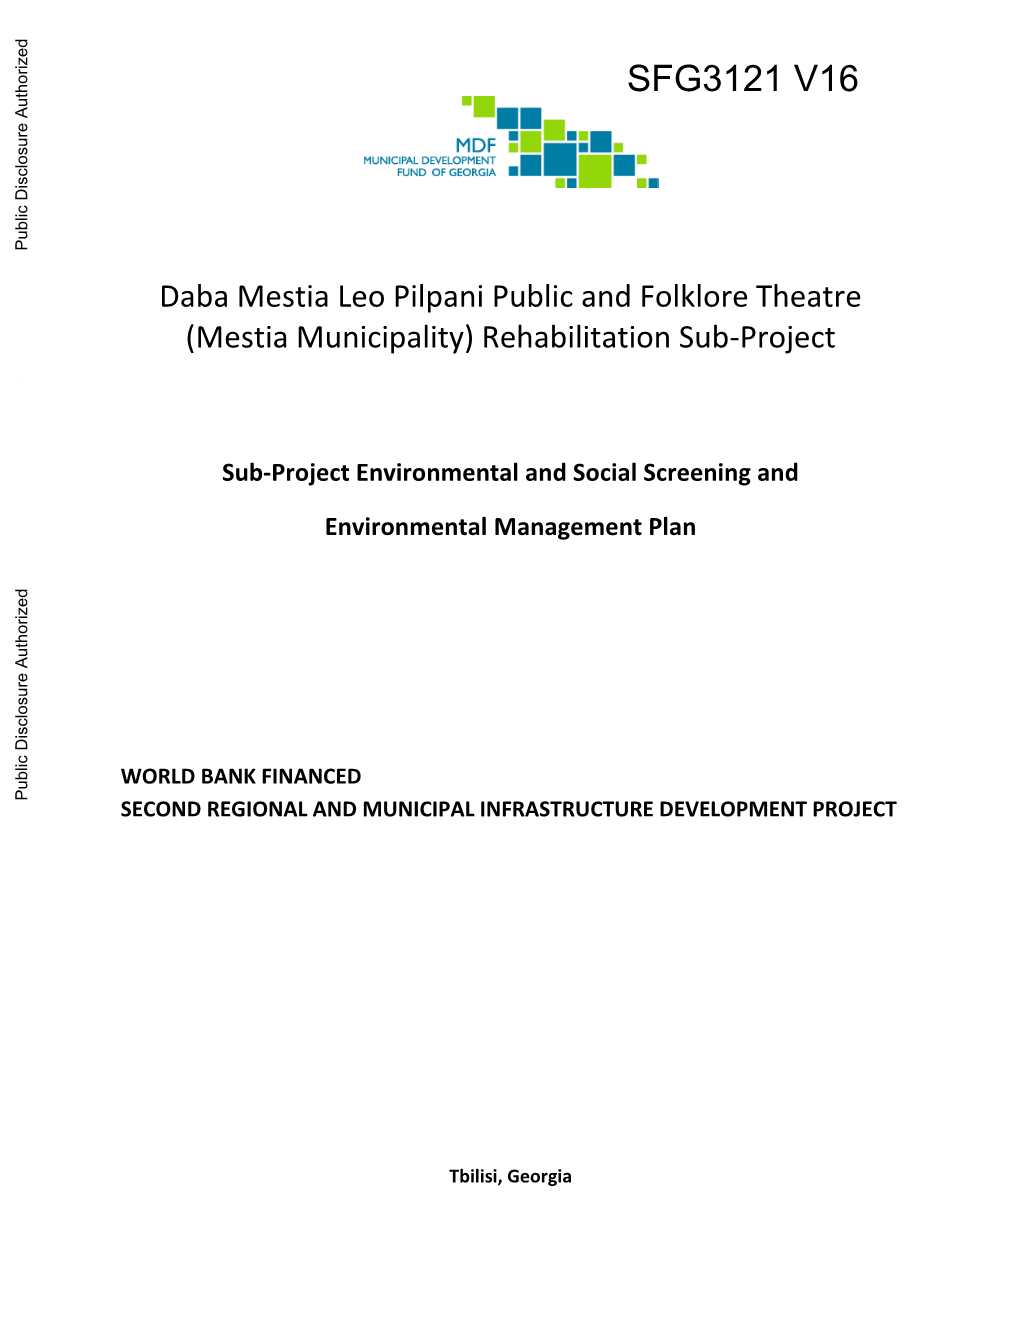 Sub-Project Environmental and Social Screening And